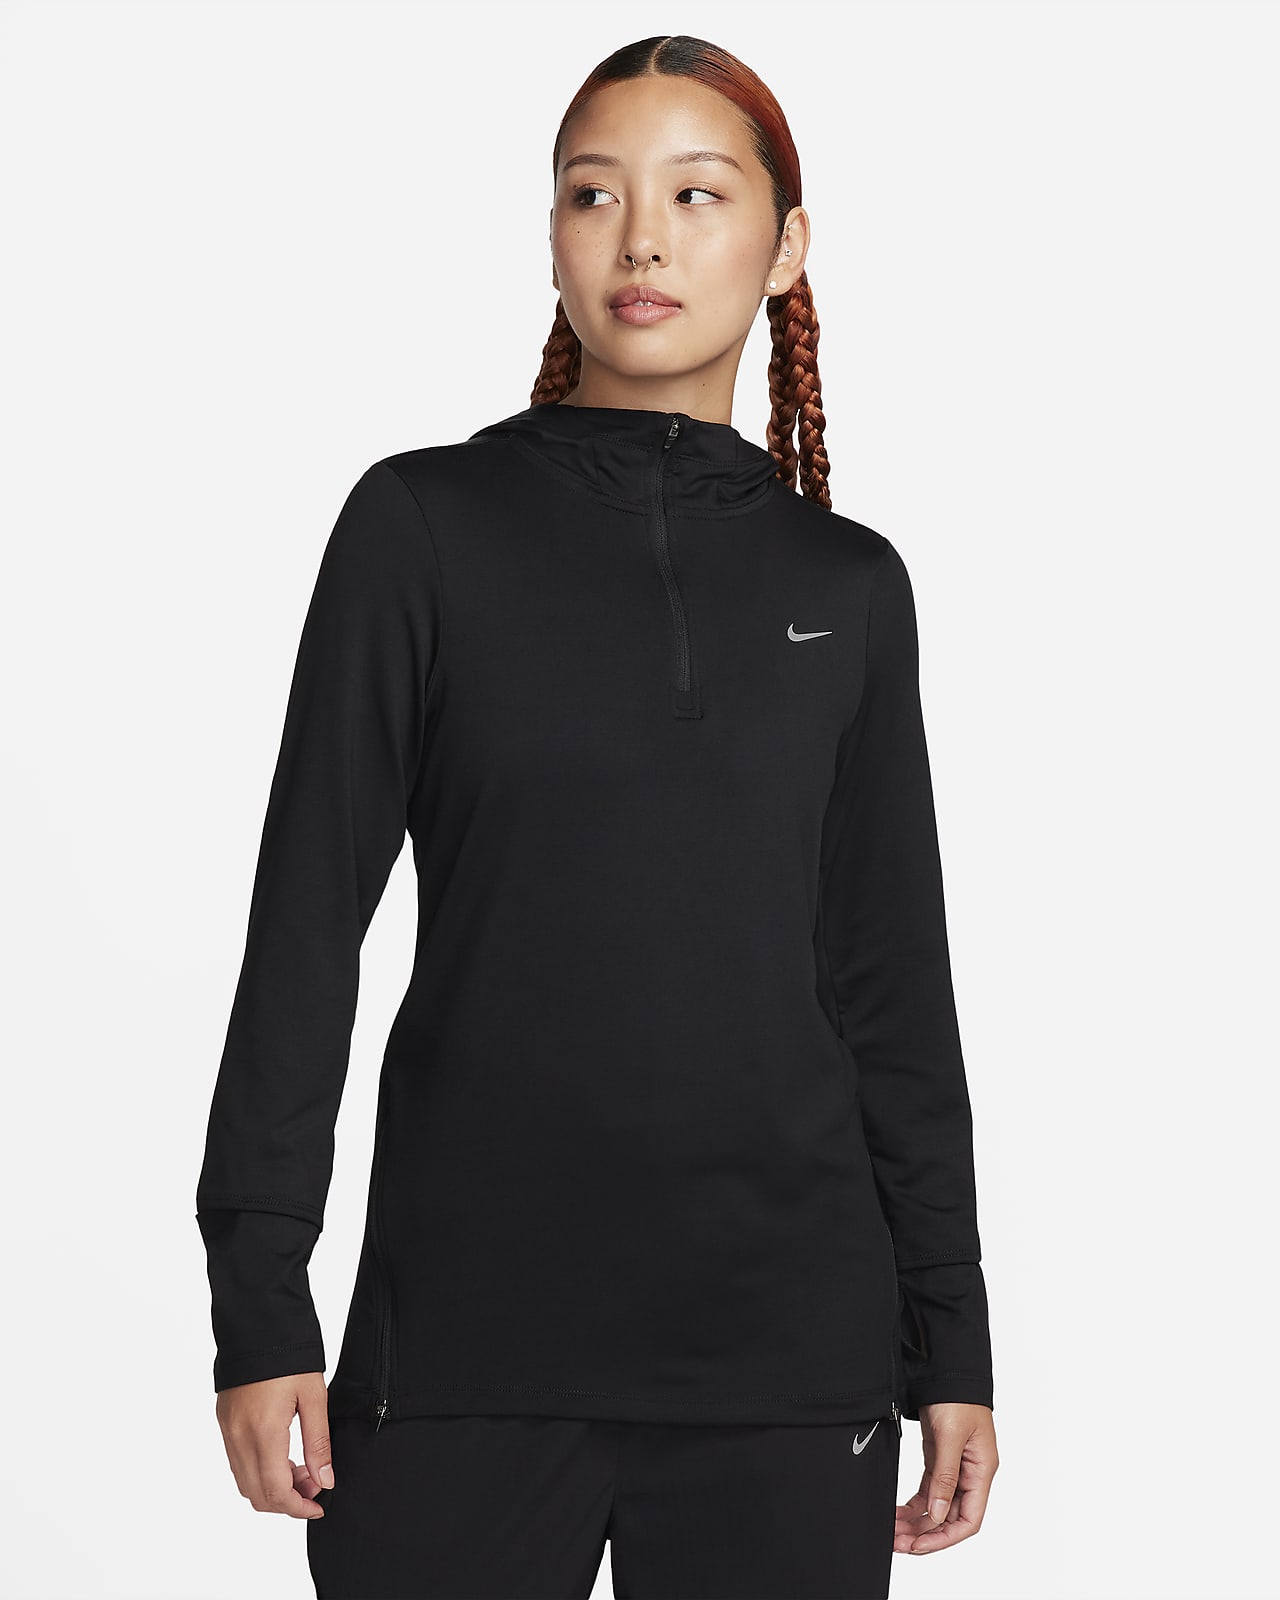 Nike Running Jackets Womens